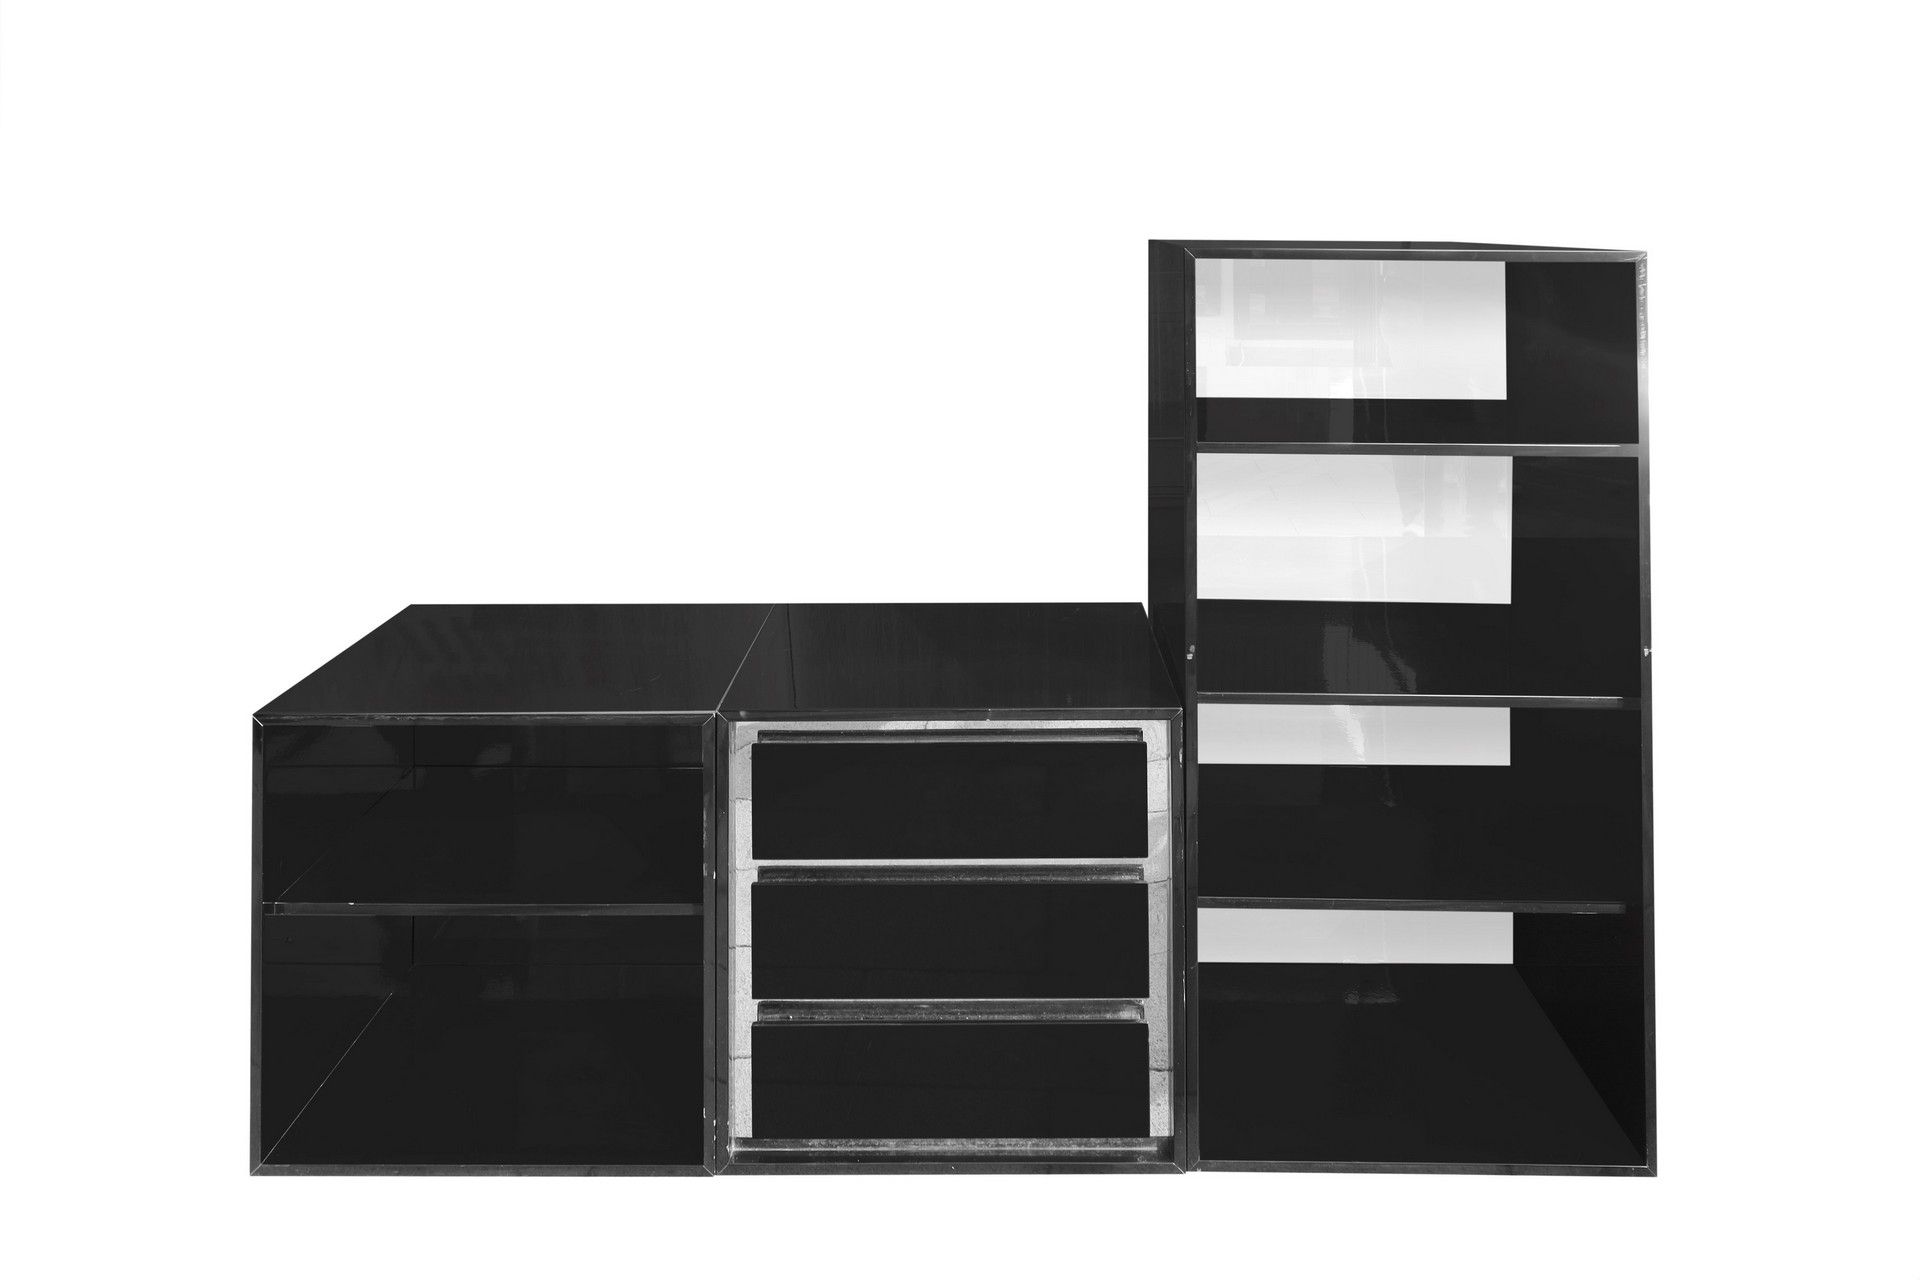 Prod. NyForm 产品NyForm - 模块化系统，70年代 
由第......件组成。
 
黑色漆面胶合板框架和镀铬金属嵌件。